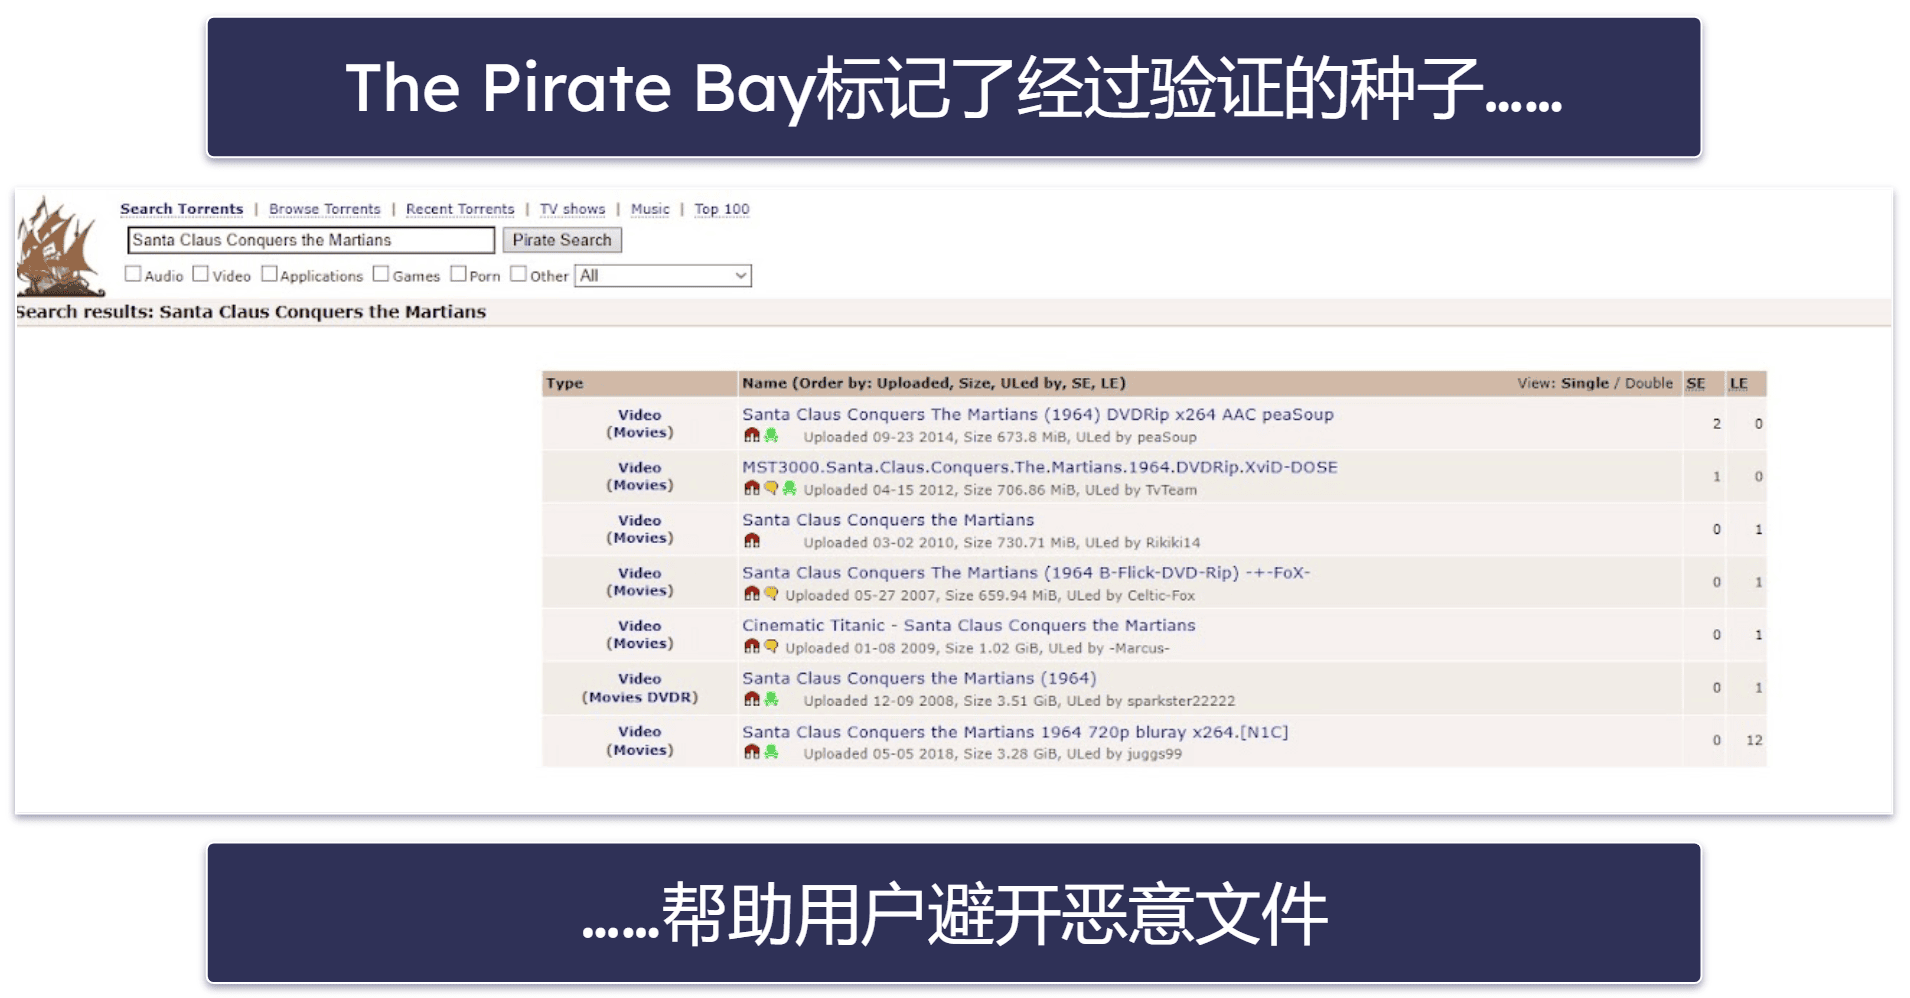 3. The Pirate Bay（海盗湾）